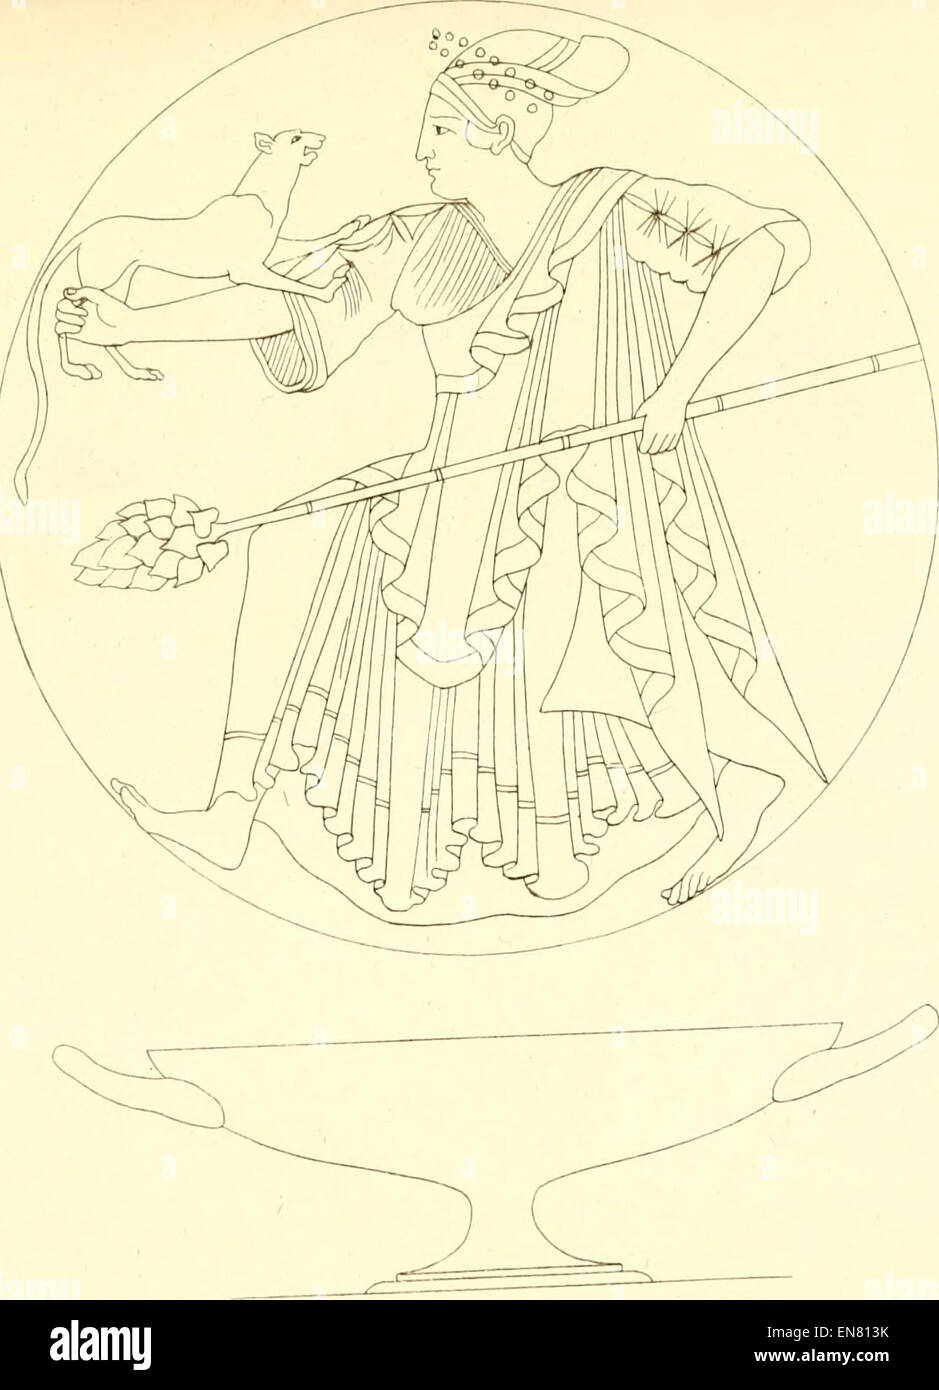 INGHIRAMI(1835) Pitture di vasi fittili Vol3 T259 (14804782453) Stock Photo